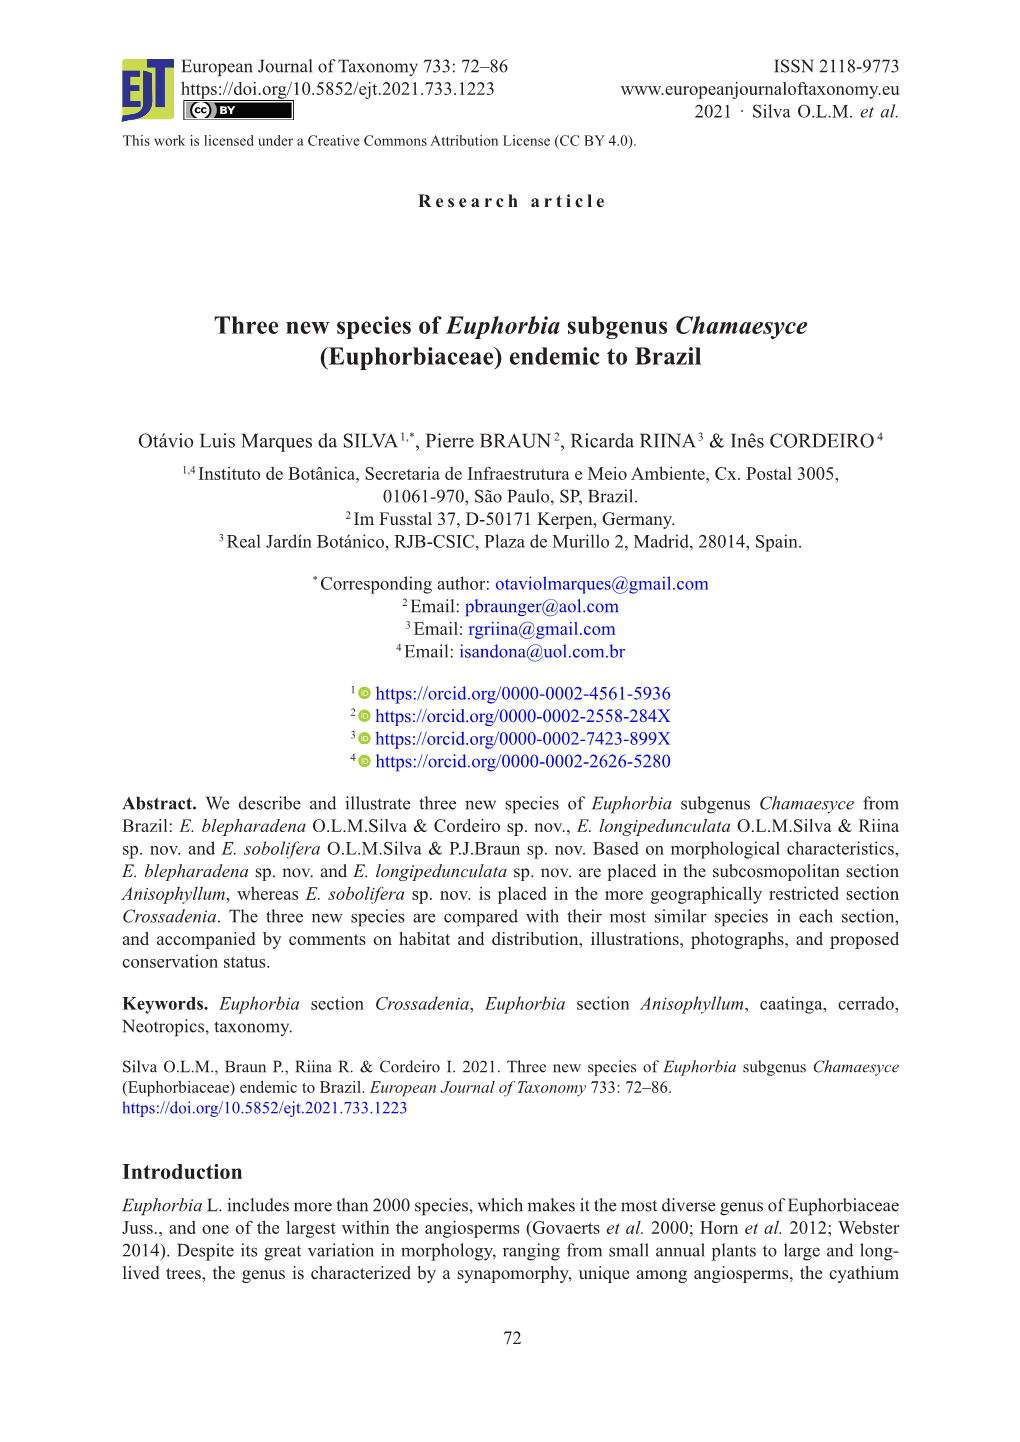 Three New Species of Euphorbia Subgenus Chamaesyce (Euphorbiaceae) Endemic to Brazil